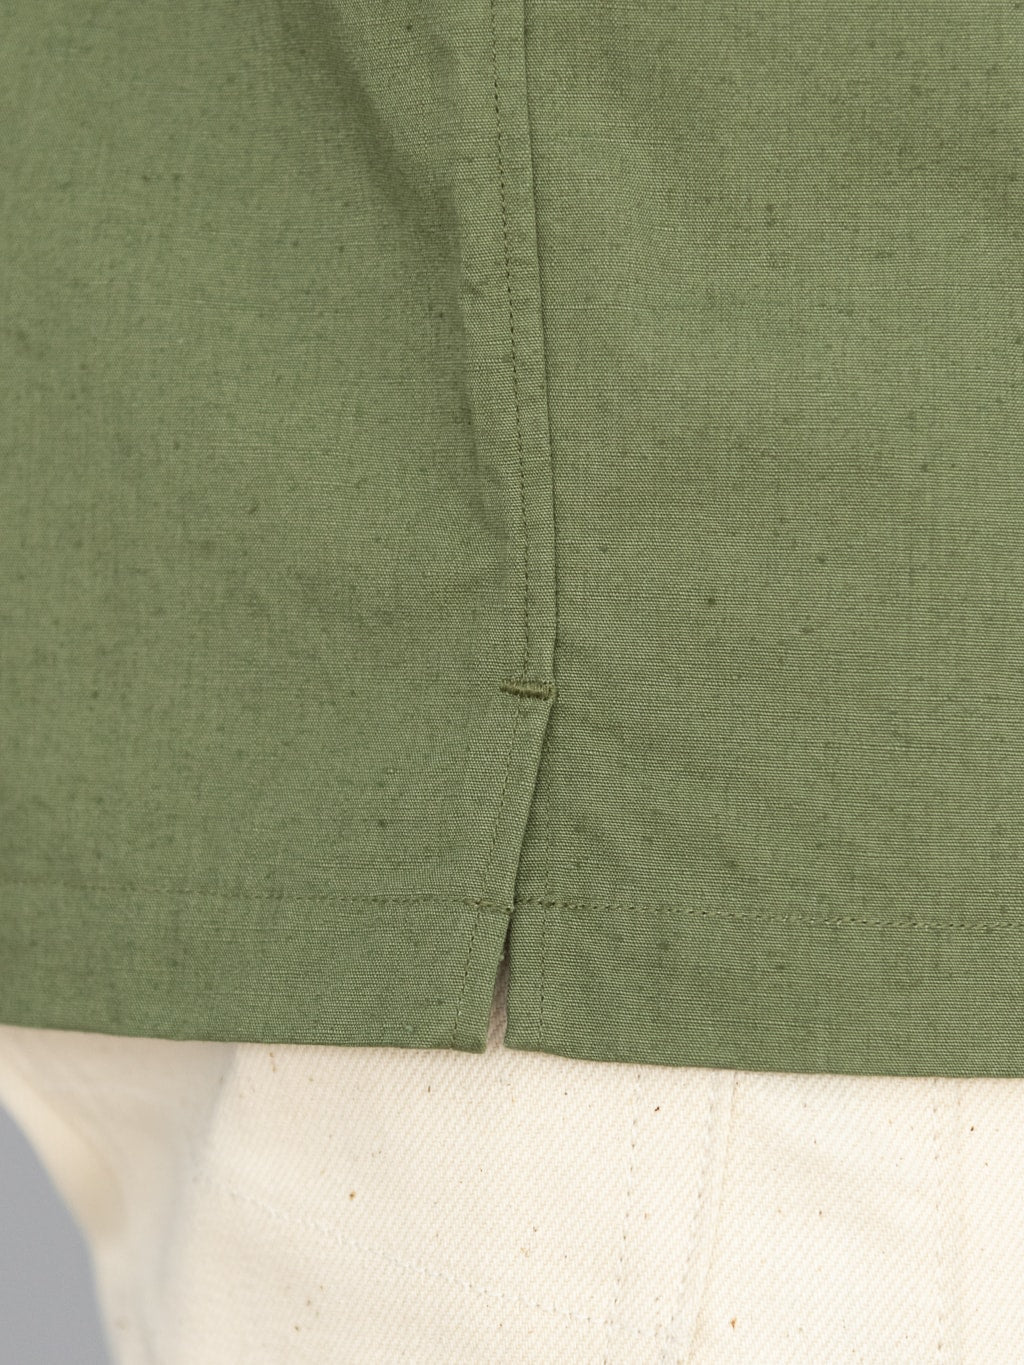 ues denim mechanic shirt sleeves shirt sage green detail